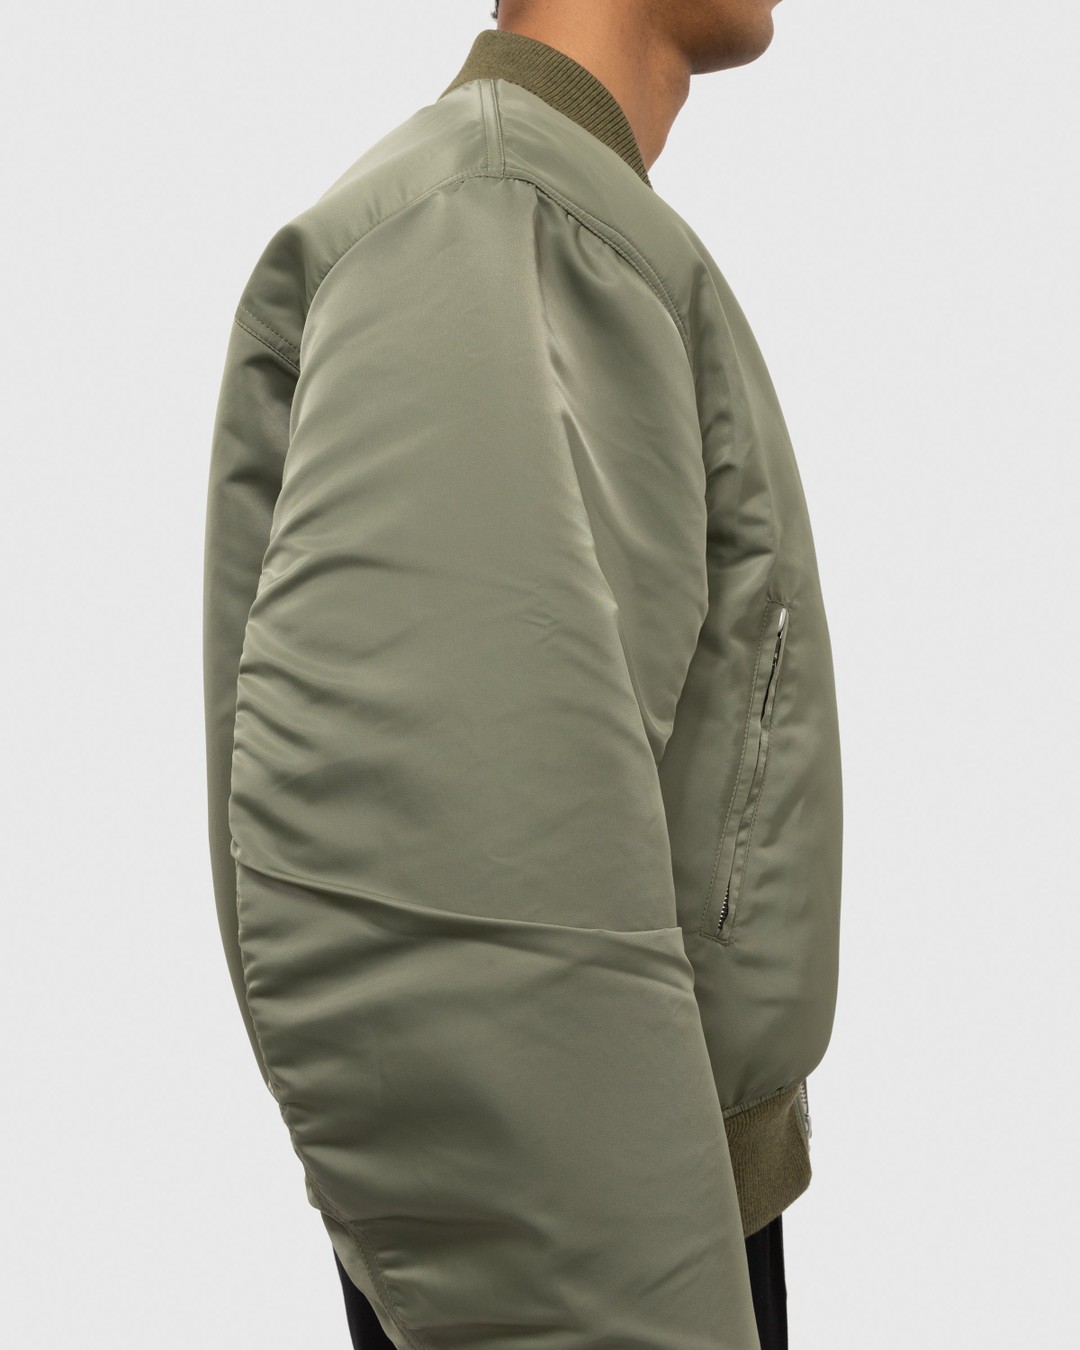 Dries van Noten – Verso Bomber Jacket Green - Outerwear - Green - Image 5